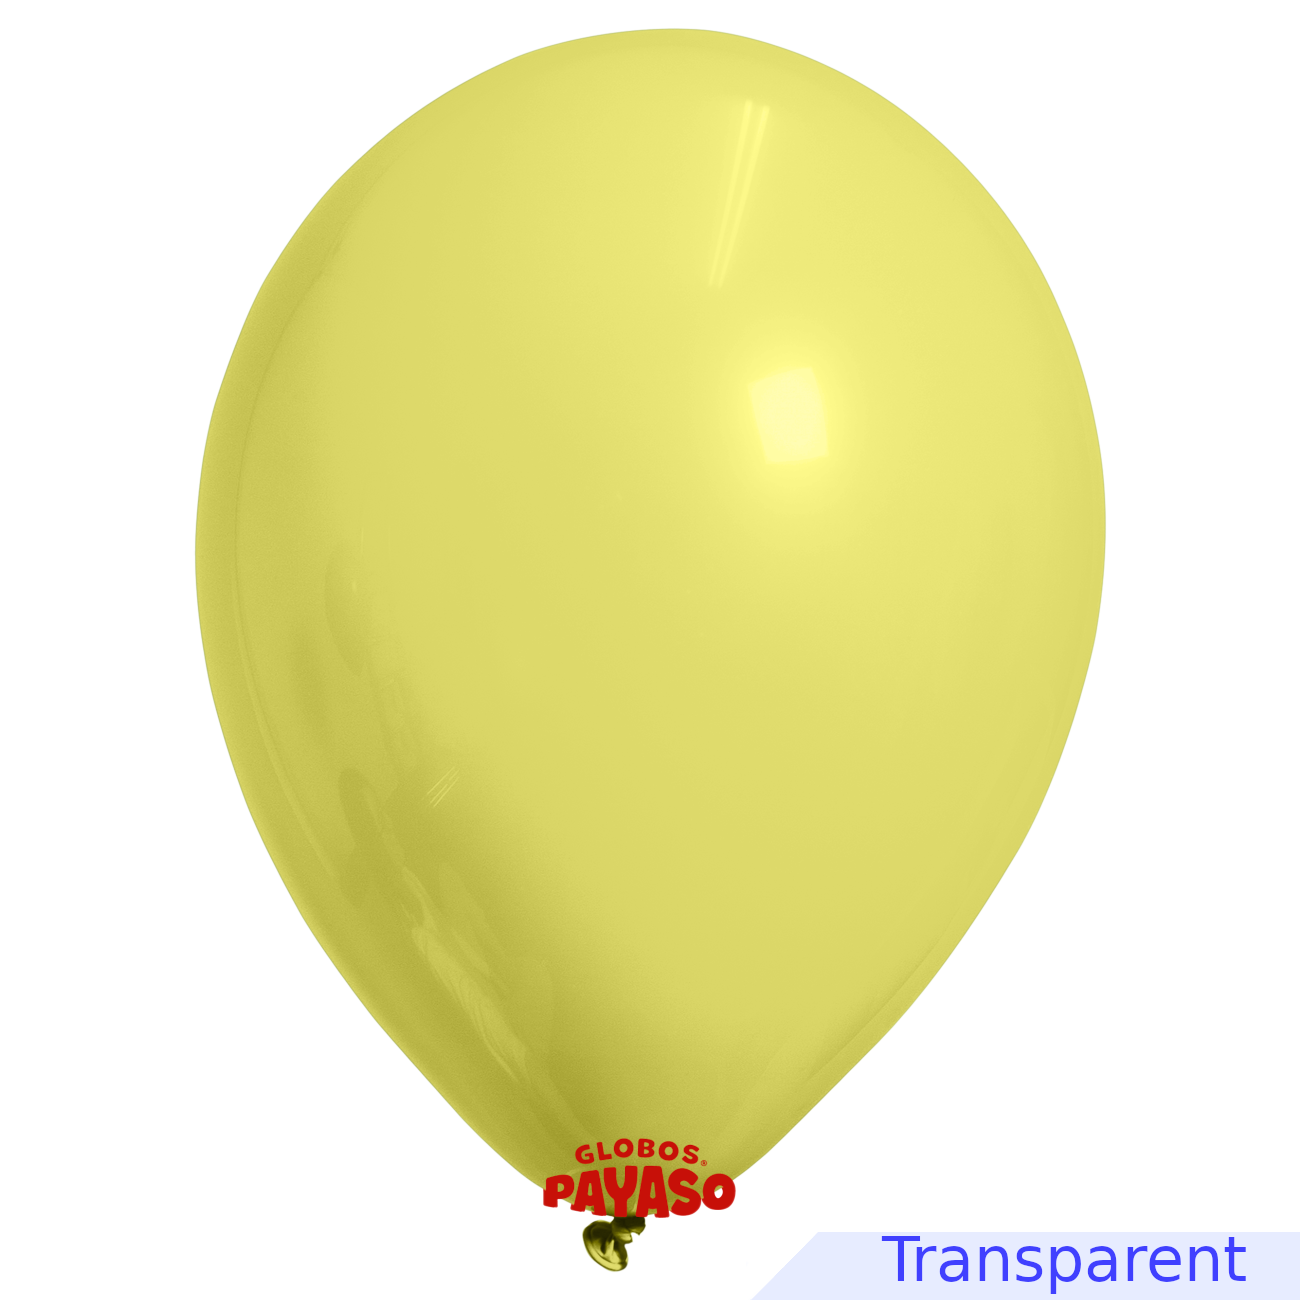 Globos Payaso / Unique 36" Yellow Translucid Decorator Balloon